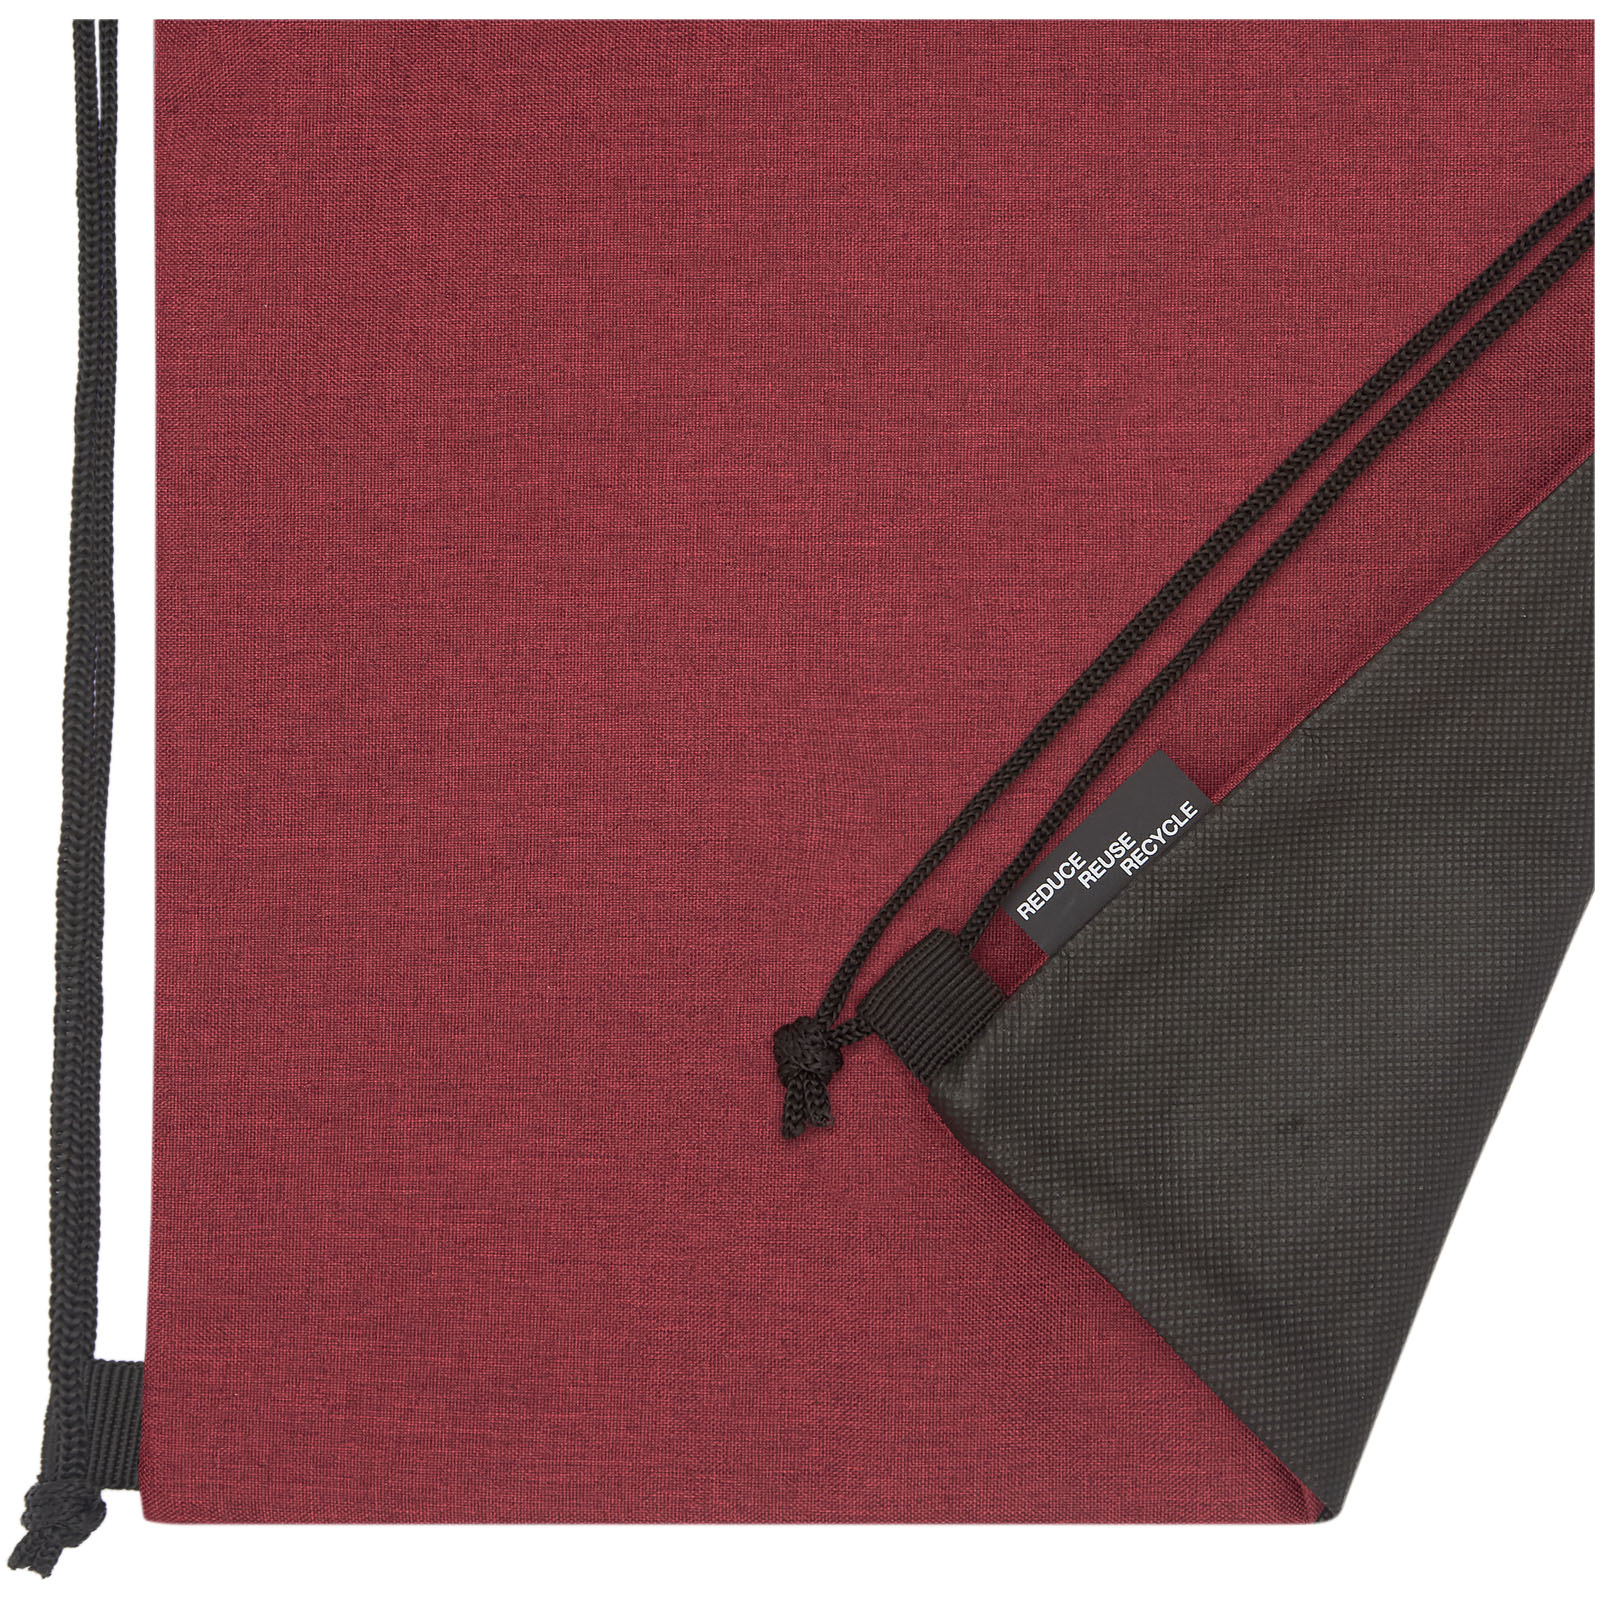 Advertising Drawstring Bags - Ross RPET drawstring bag 5L - 4